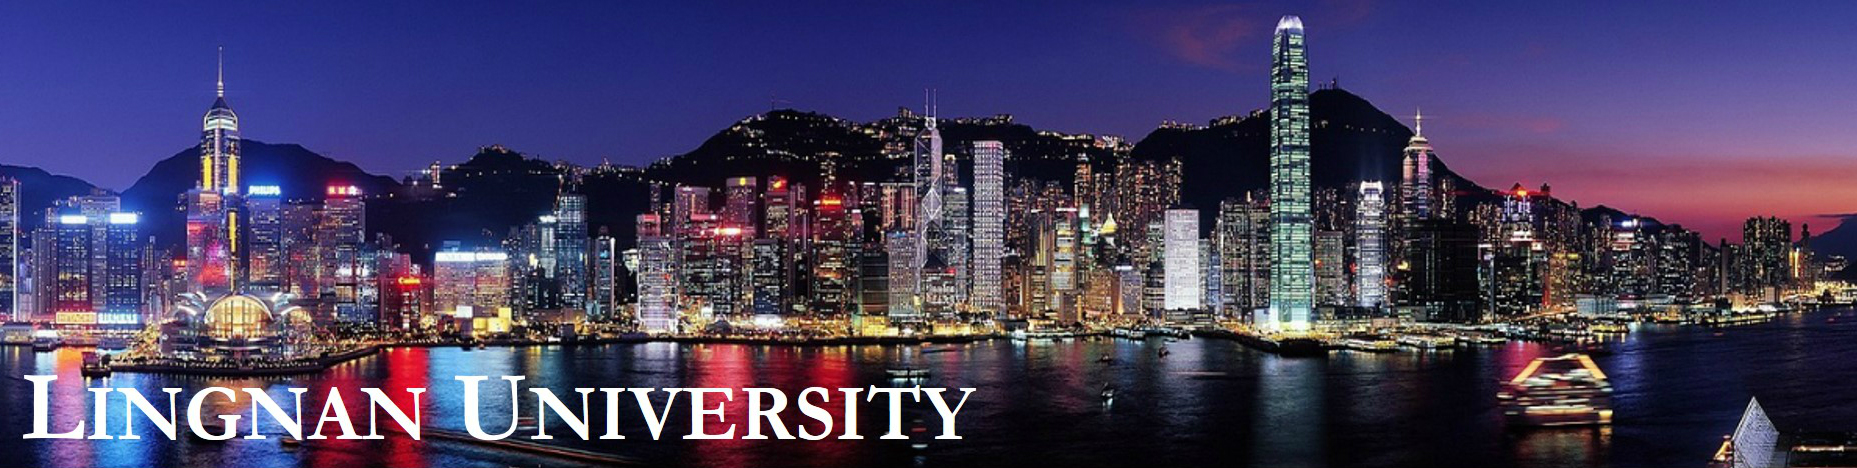 Lingnan University banner